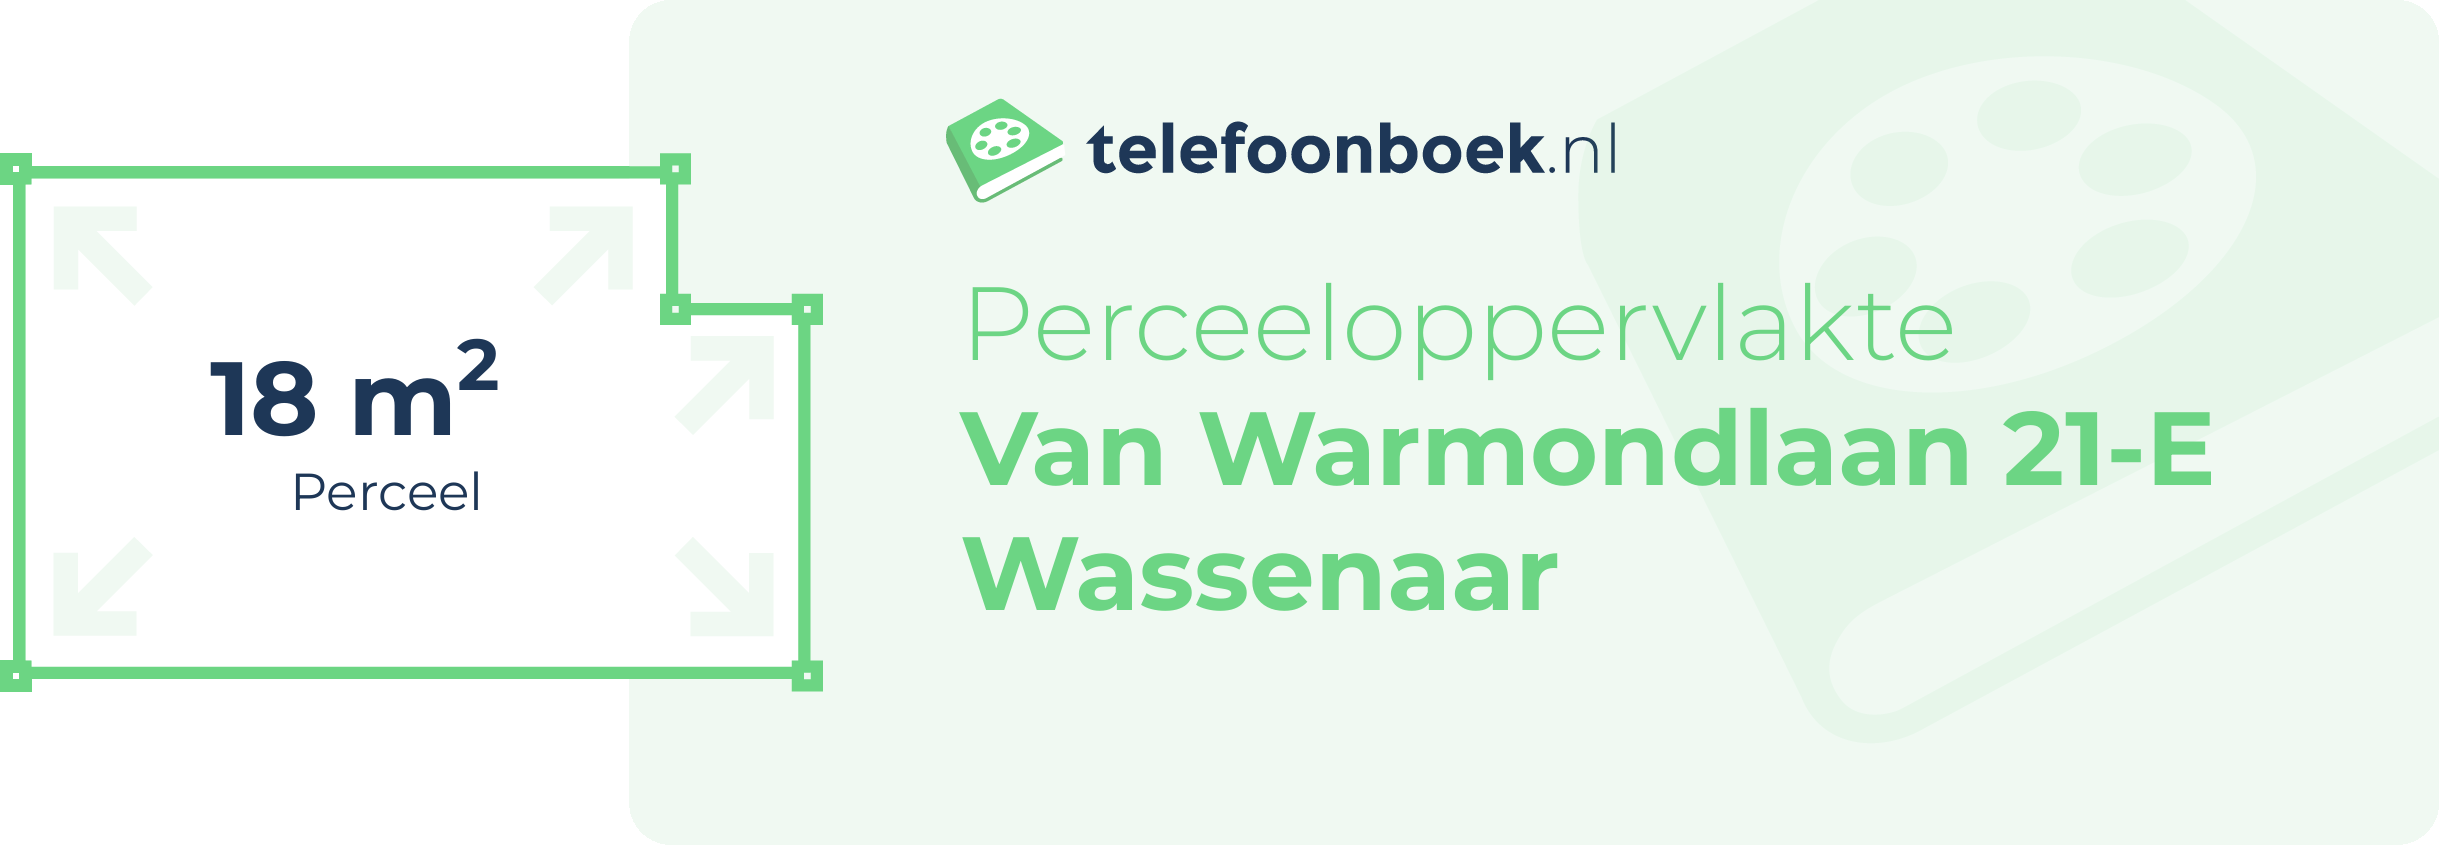 Perceeloppervlakte Van Warmondlaan 21-E Wassenaar